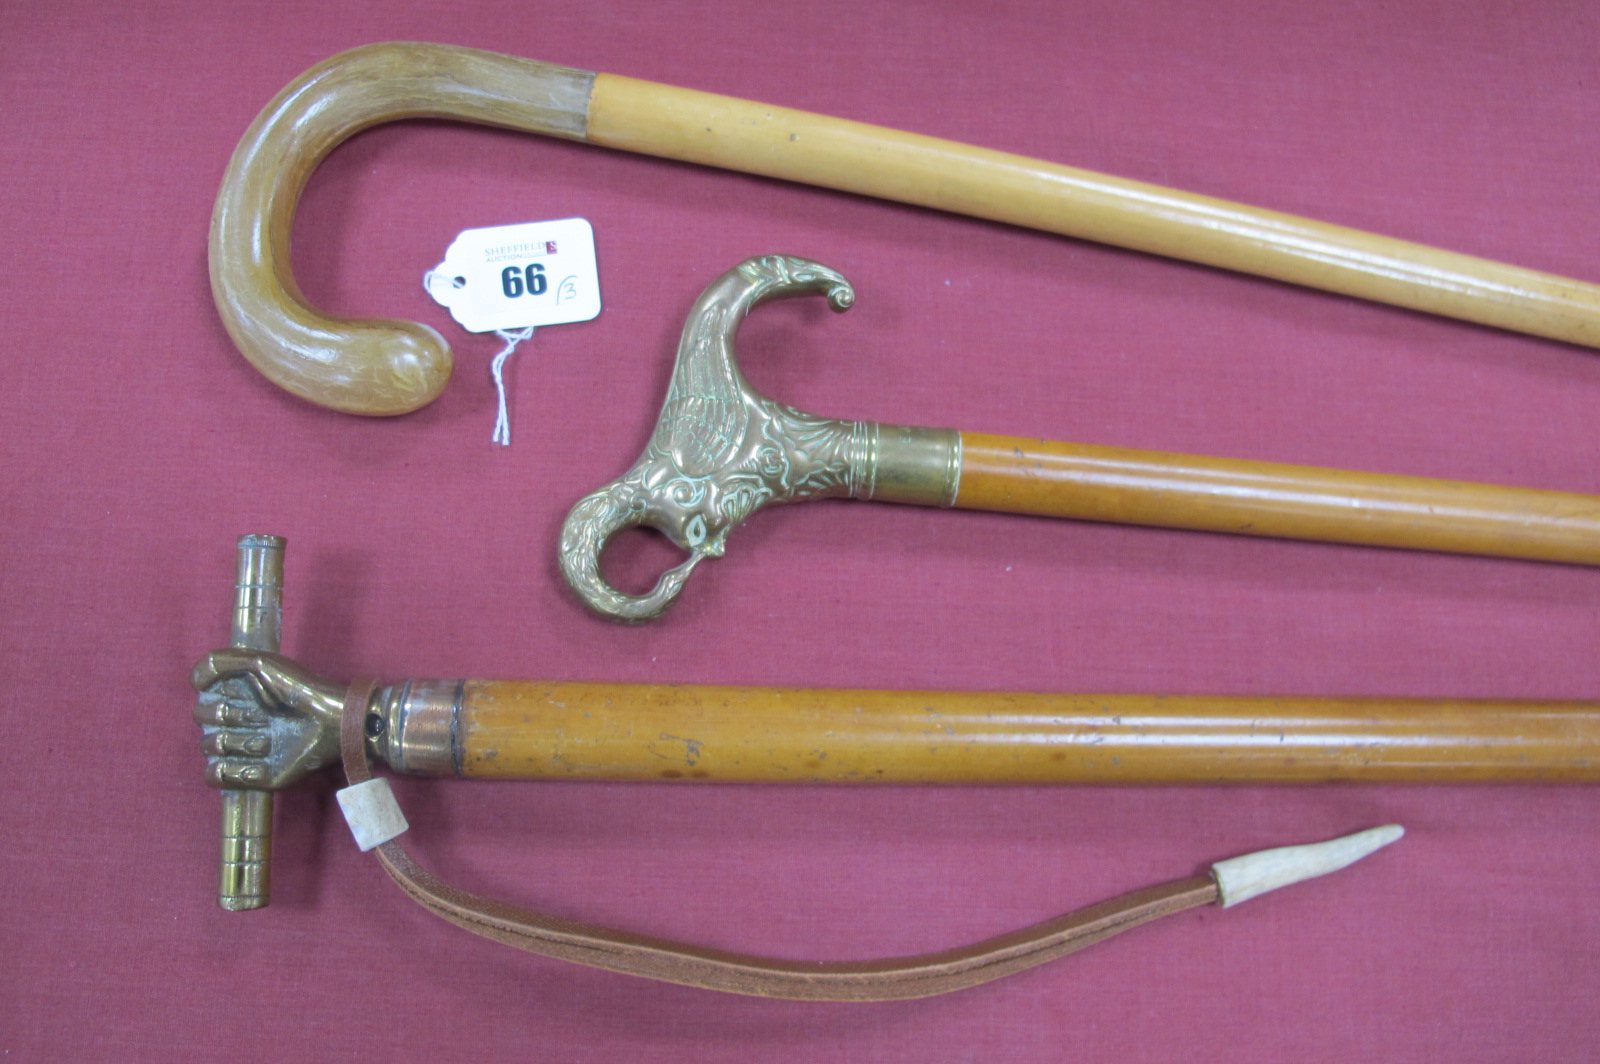 A Malaca Stick, with brass fist handle holding a baton, wrist hoop, copper ferrule, very long